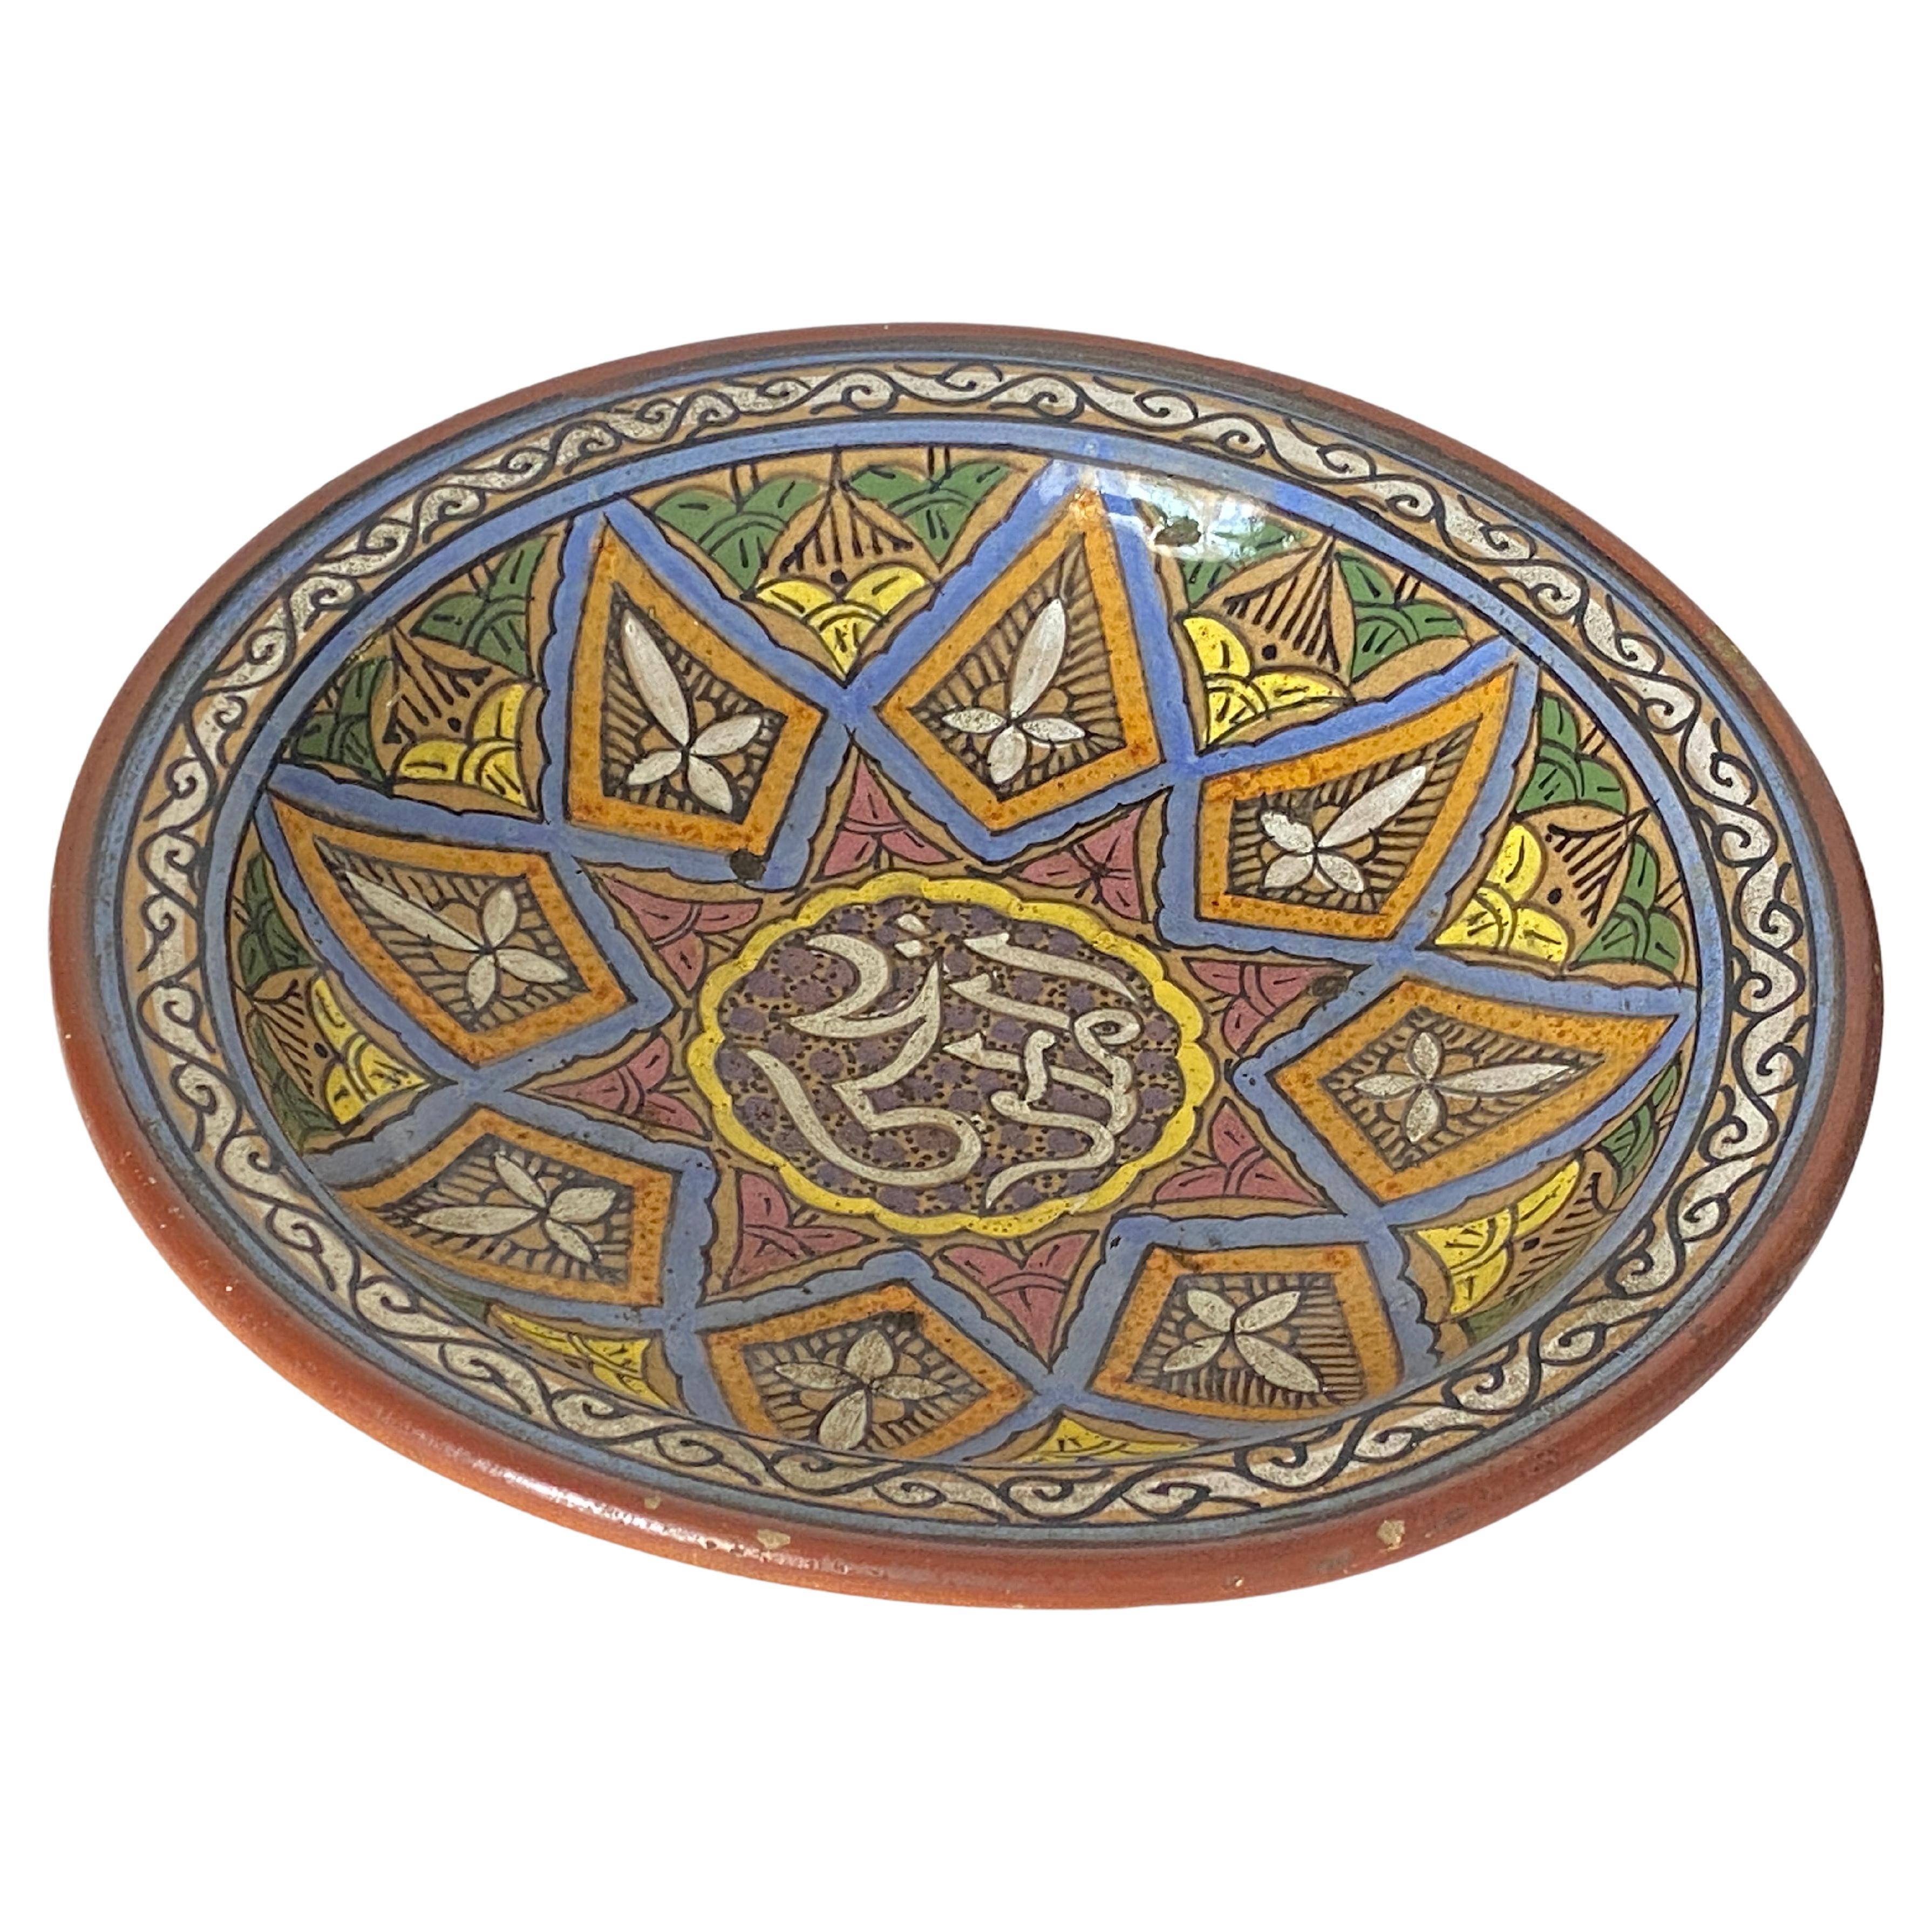 Early 20th Century Morocco Fez Ceramic Bowl